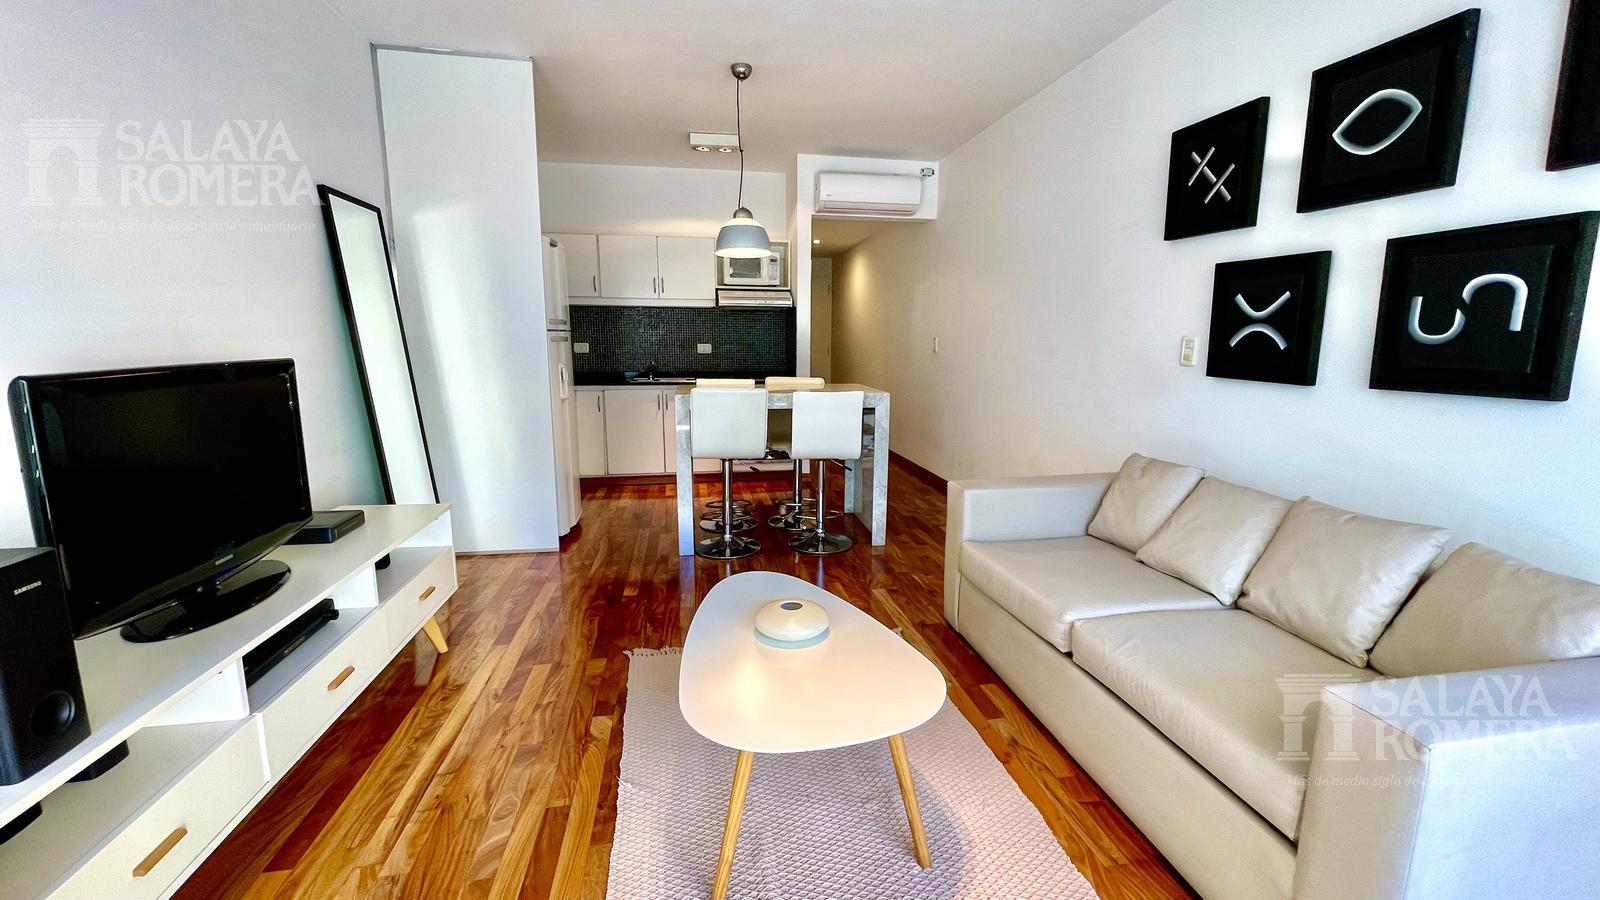 #4753325 | Rental | Apartment | Olivos (Salaya Romera Propiedades)